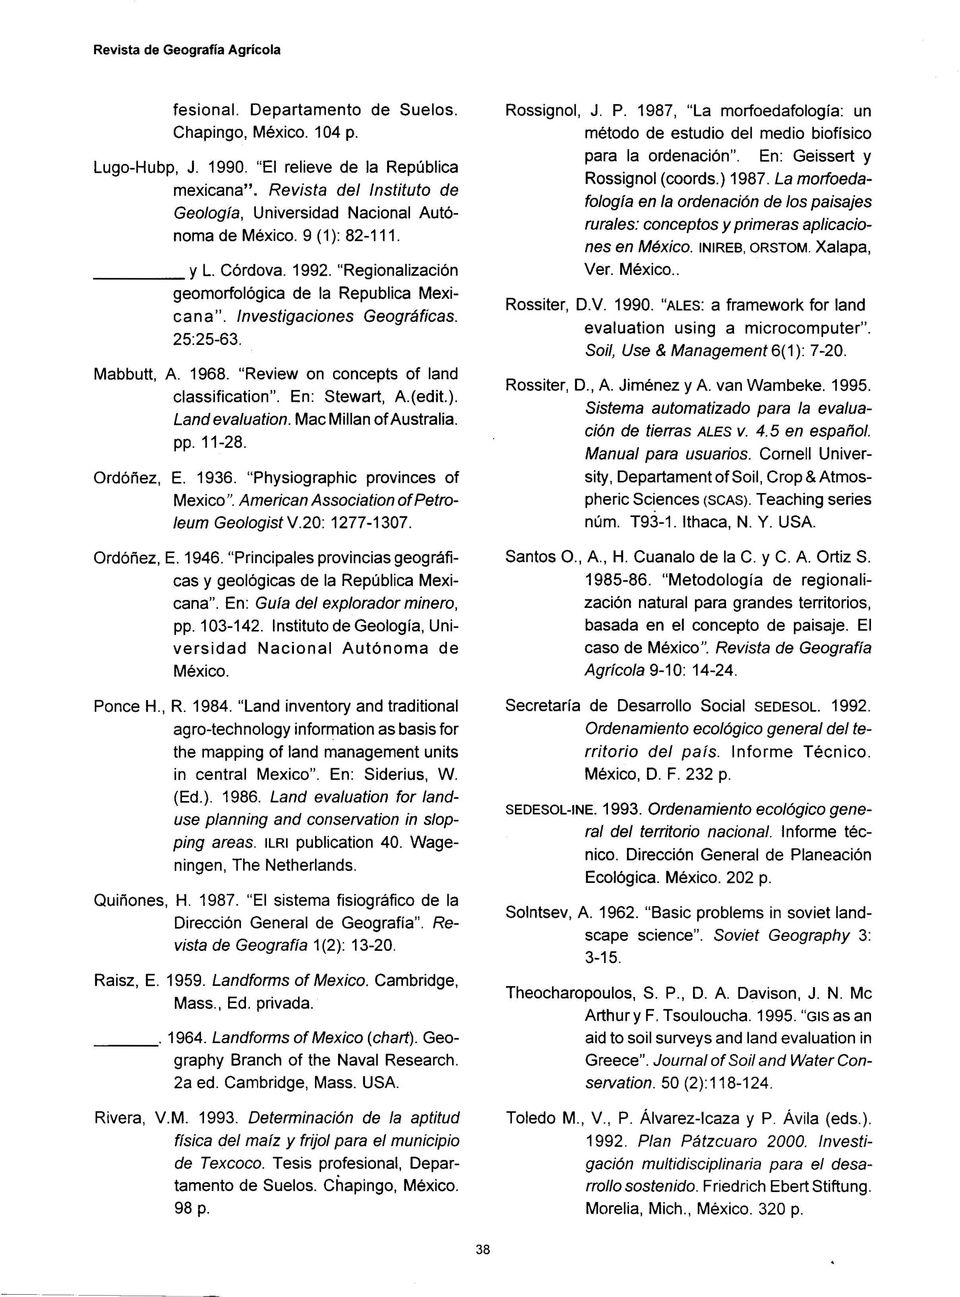 25:25-63. Mabbutt, A 1968. "Review on concepts of land classification". En : Stewart, A(edit.). Land evaluation. Mac Millan of Australia. pp. 11-28. Ordóñez, E. 1936.